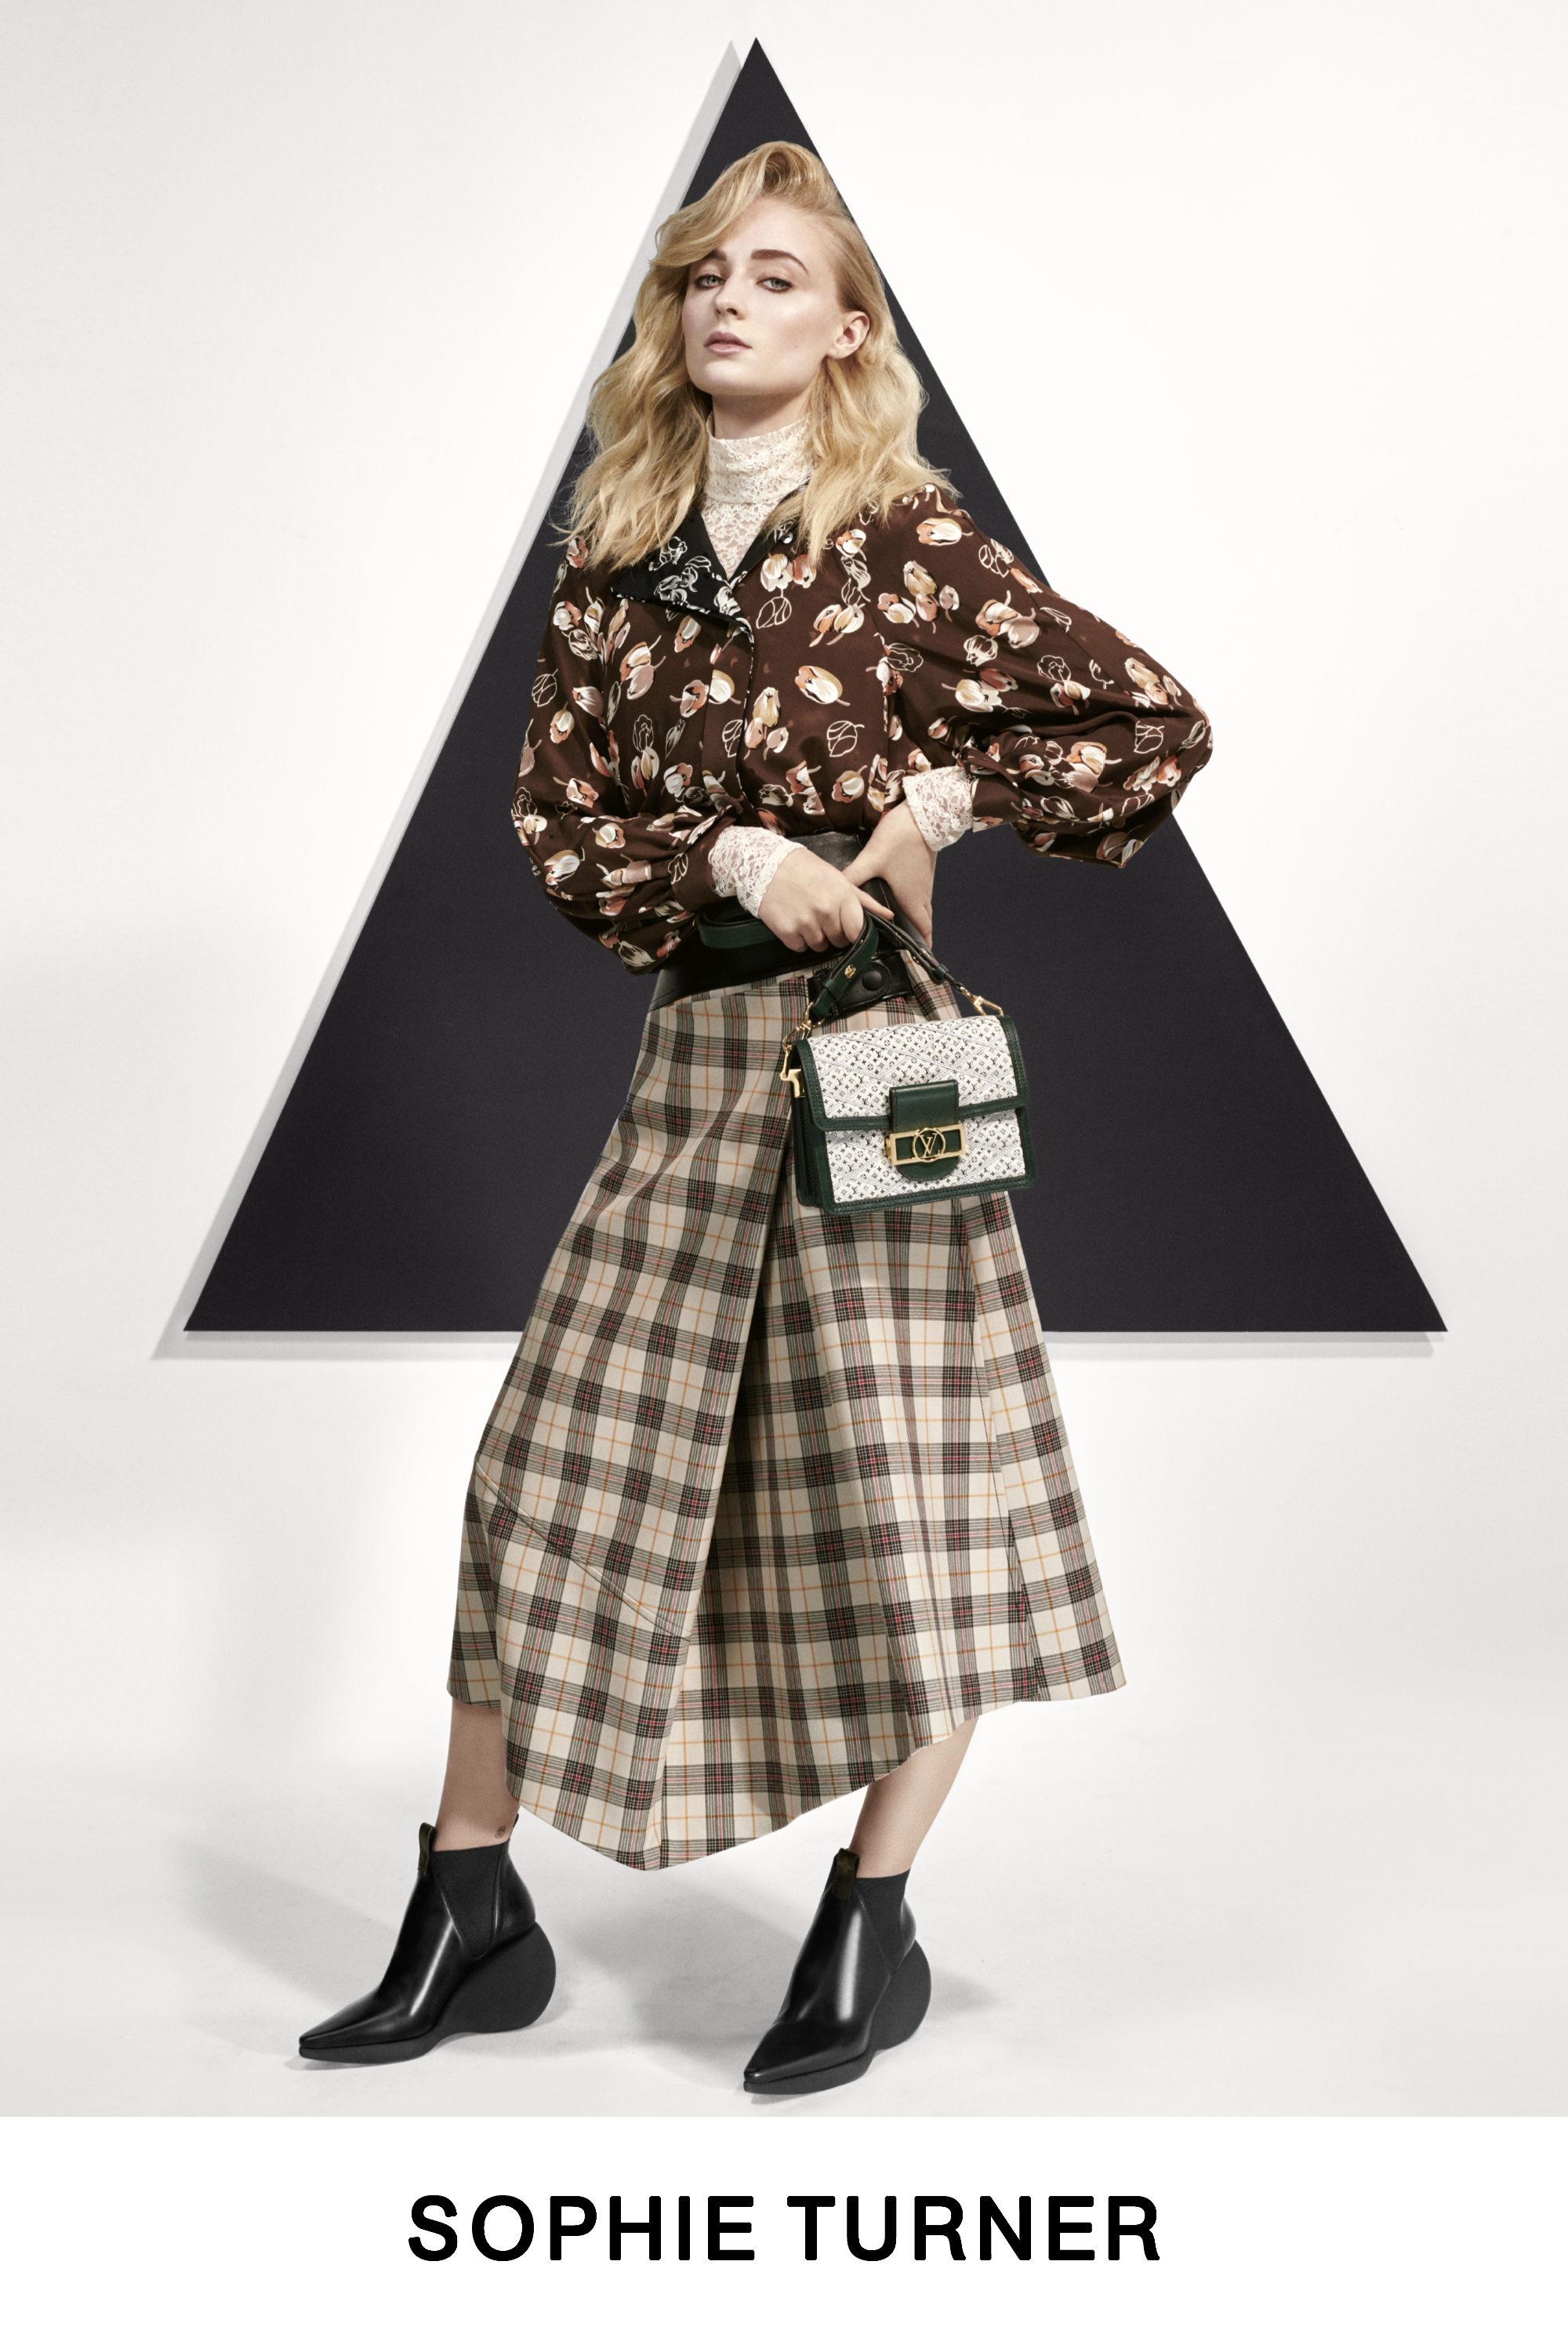 Louis Vuitton's Star-Studded Pre-Fall 19 Lookbook